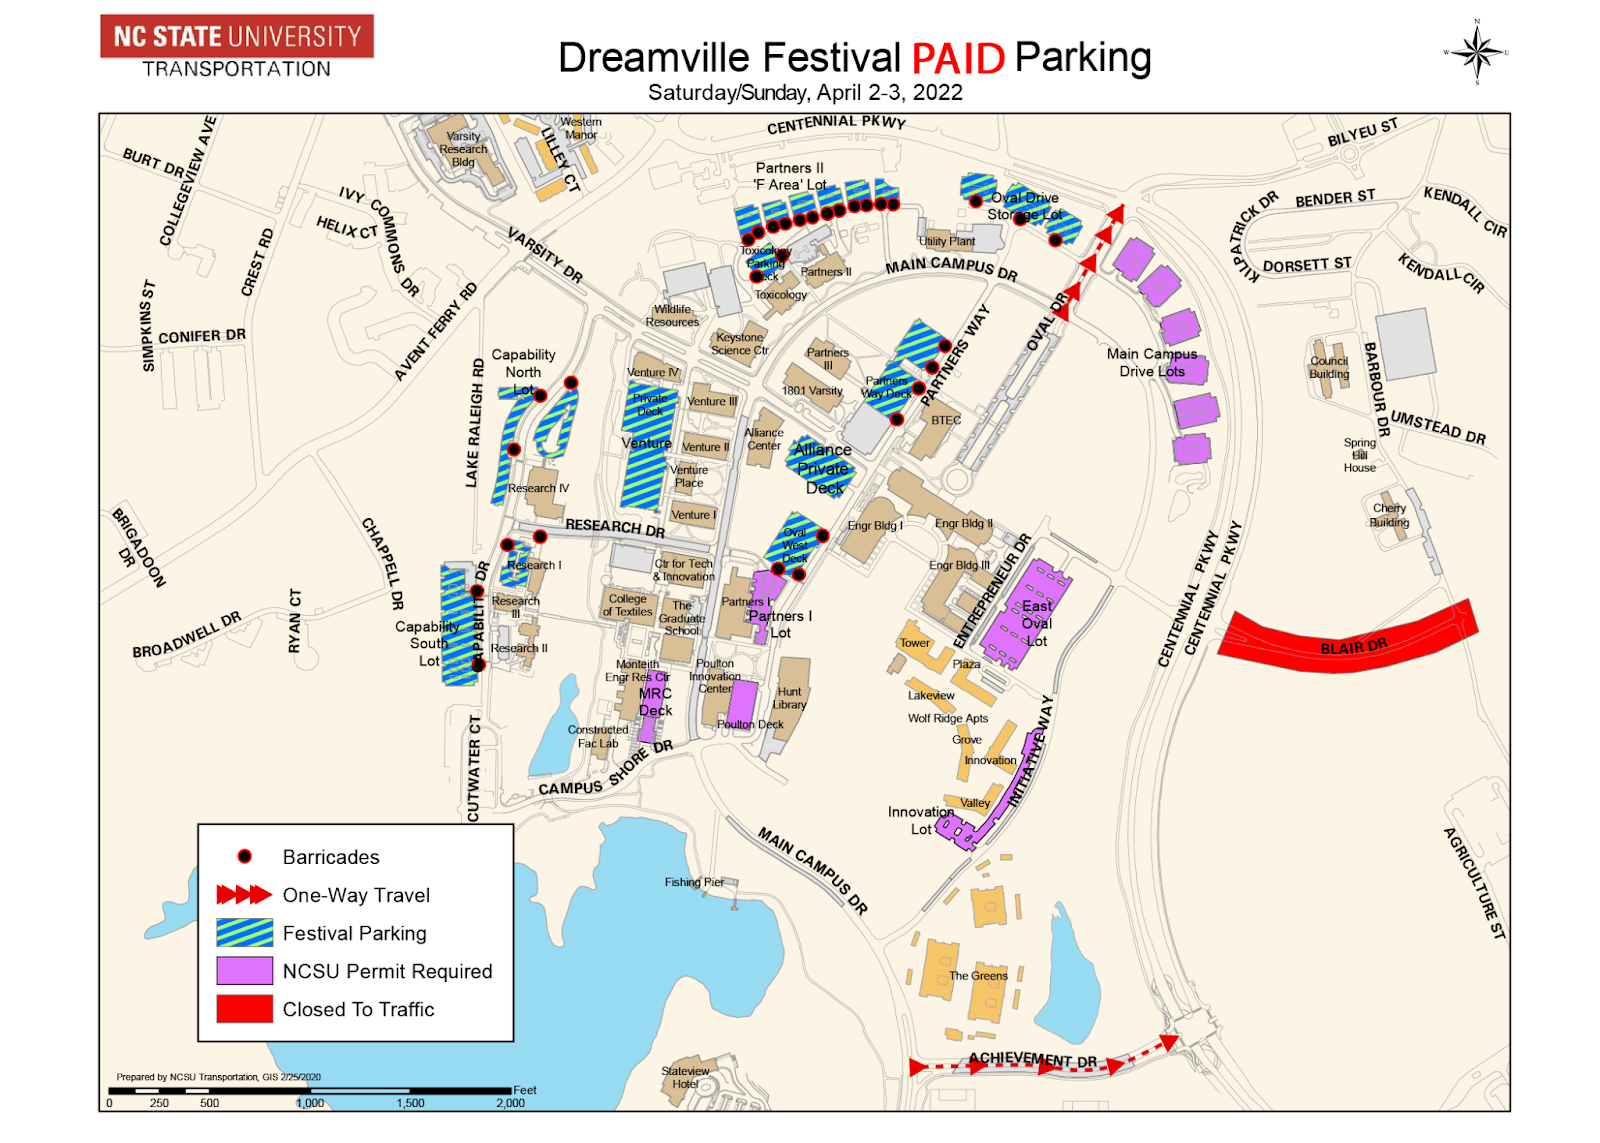 Dreamville Fest PAID parking map showing paid parking lots